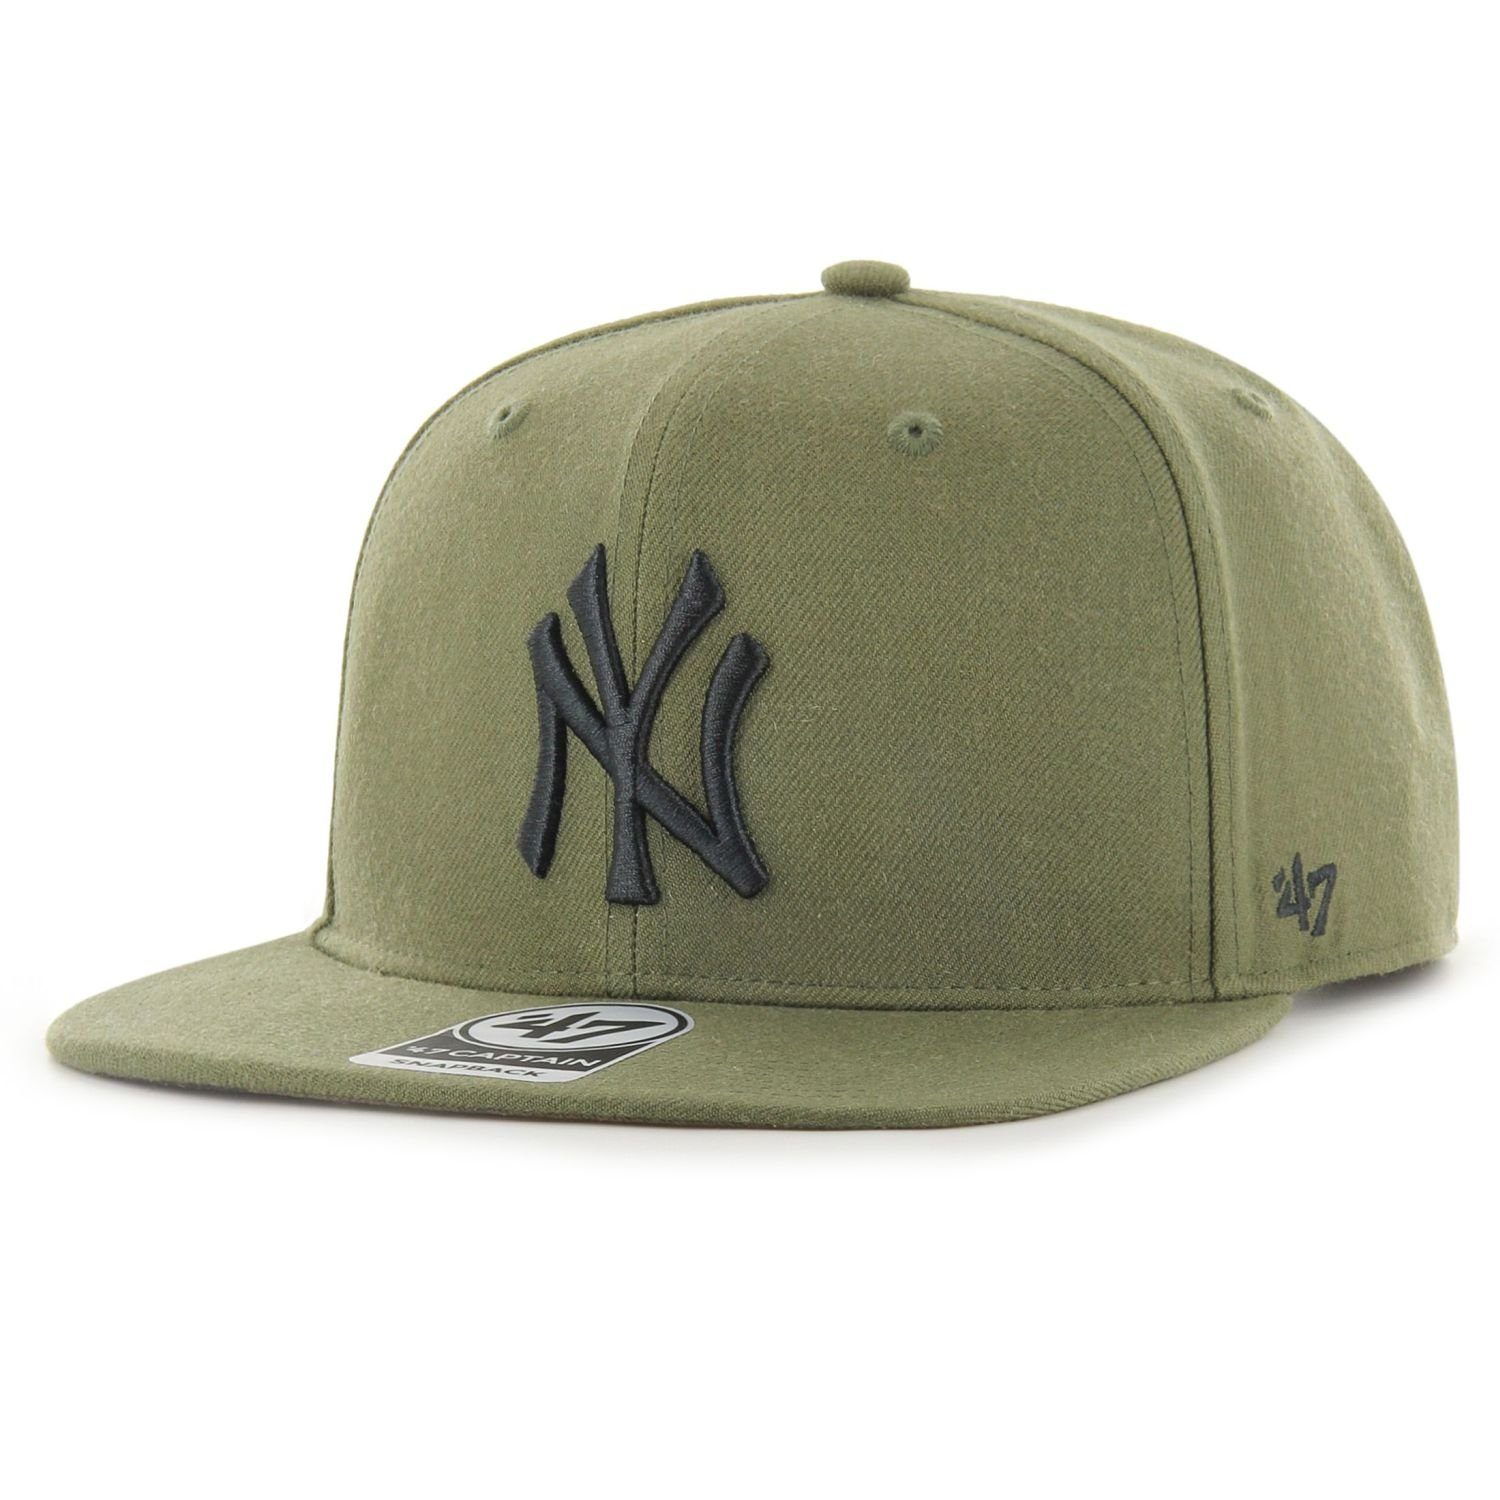 CAPTAIN Cap Yankees York New '47 Brand Snapback